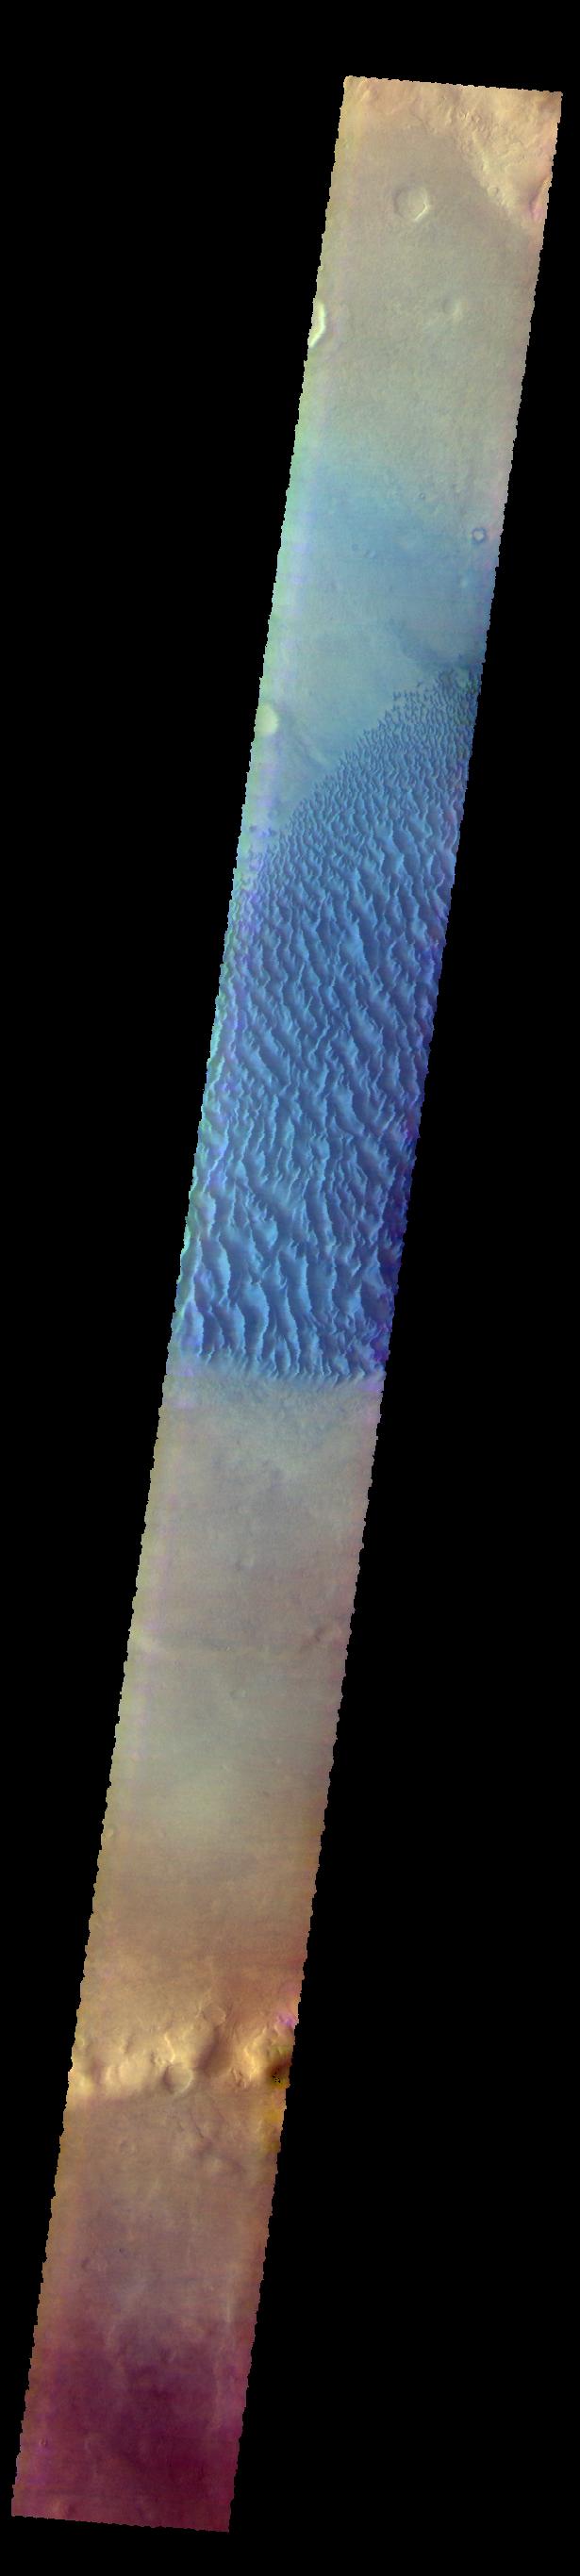 PIA22670: Proctor Crater Dunes - False Color